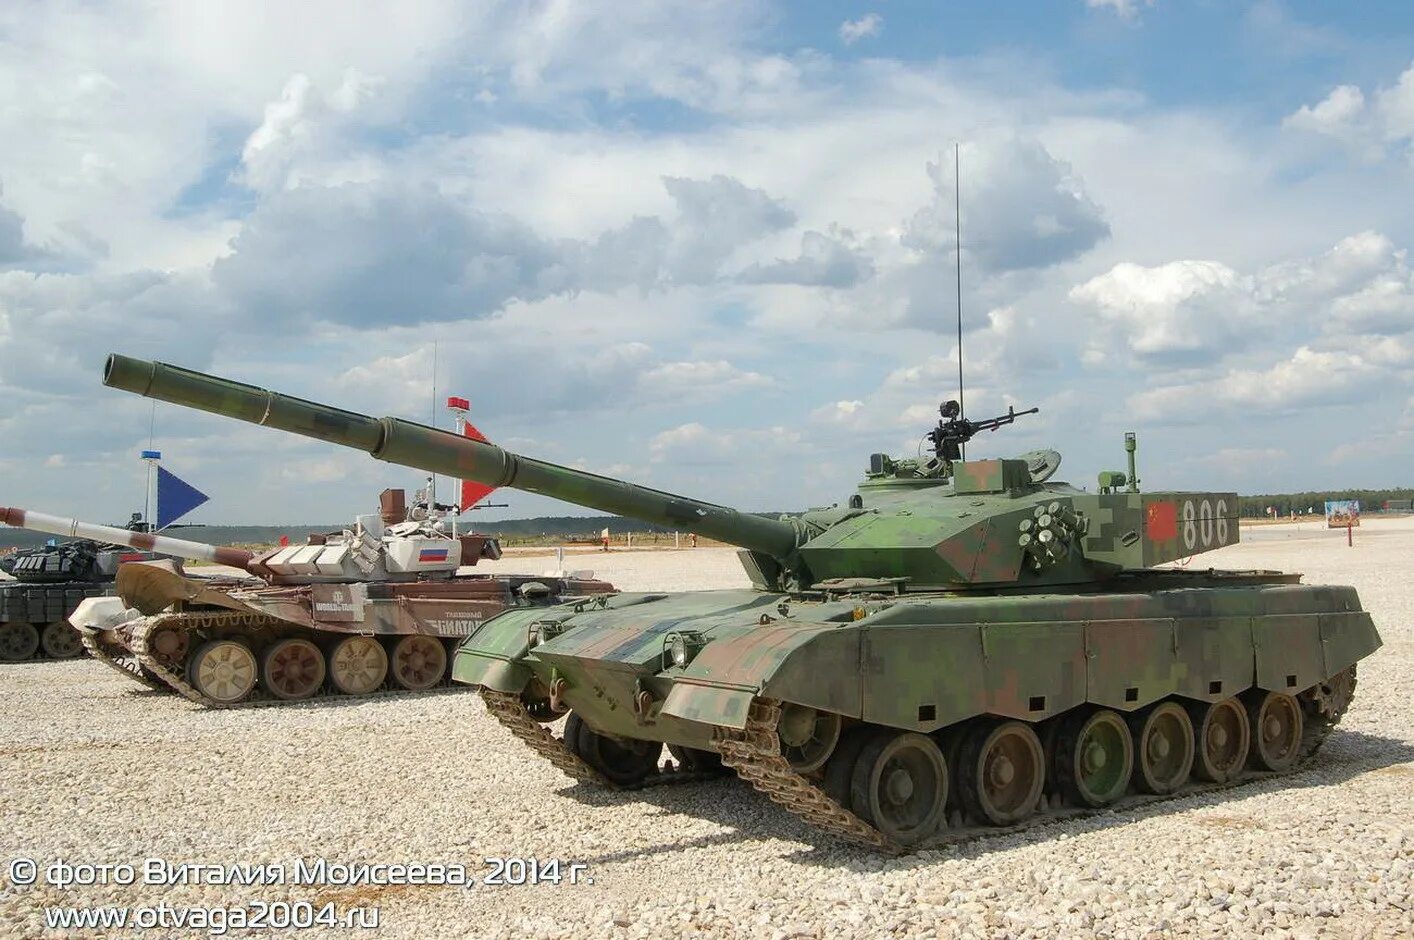 Tank 300 great Wall. Китайский танк 300. Китайский внедорожник танк 300. Китайский танк 500. Танк 500 нижний новгород